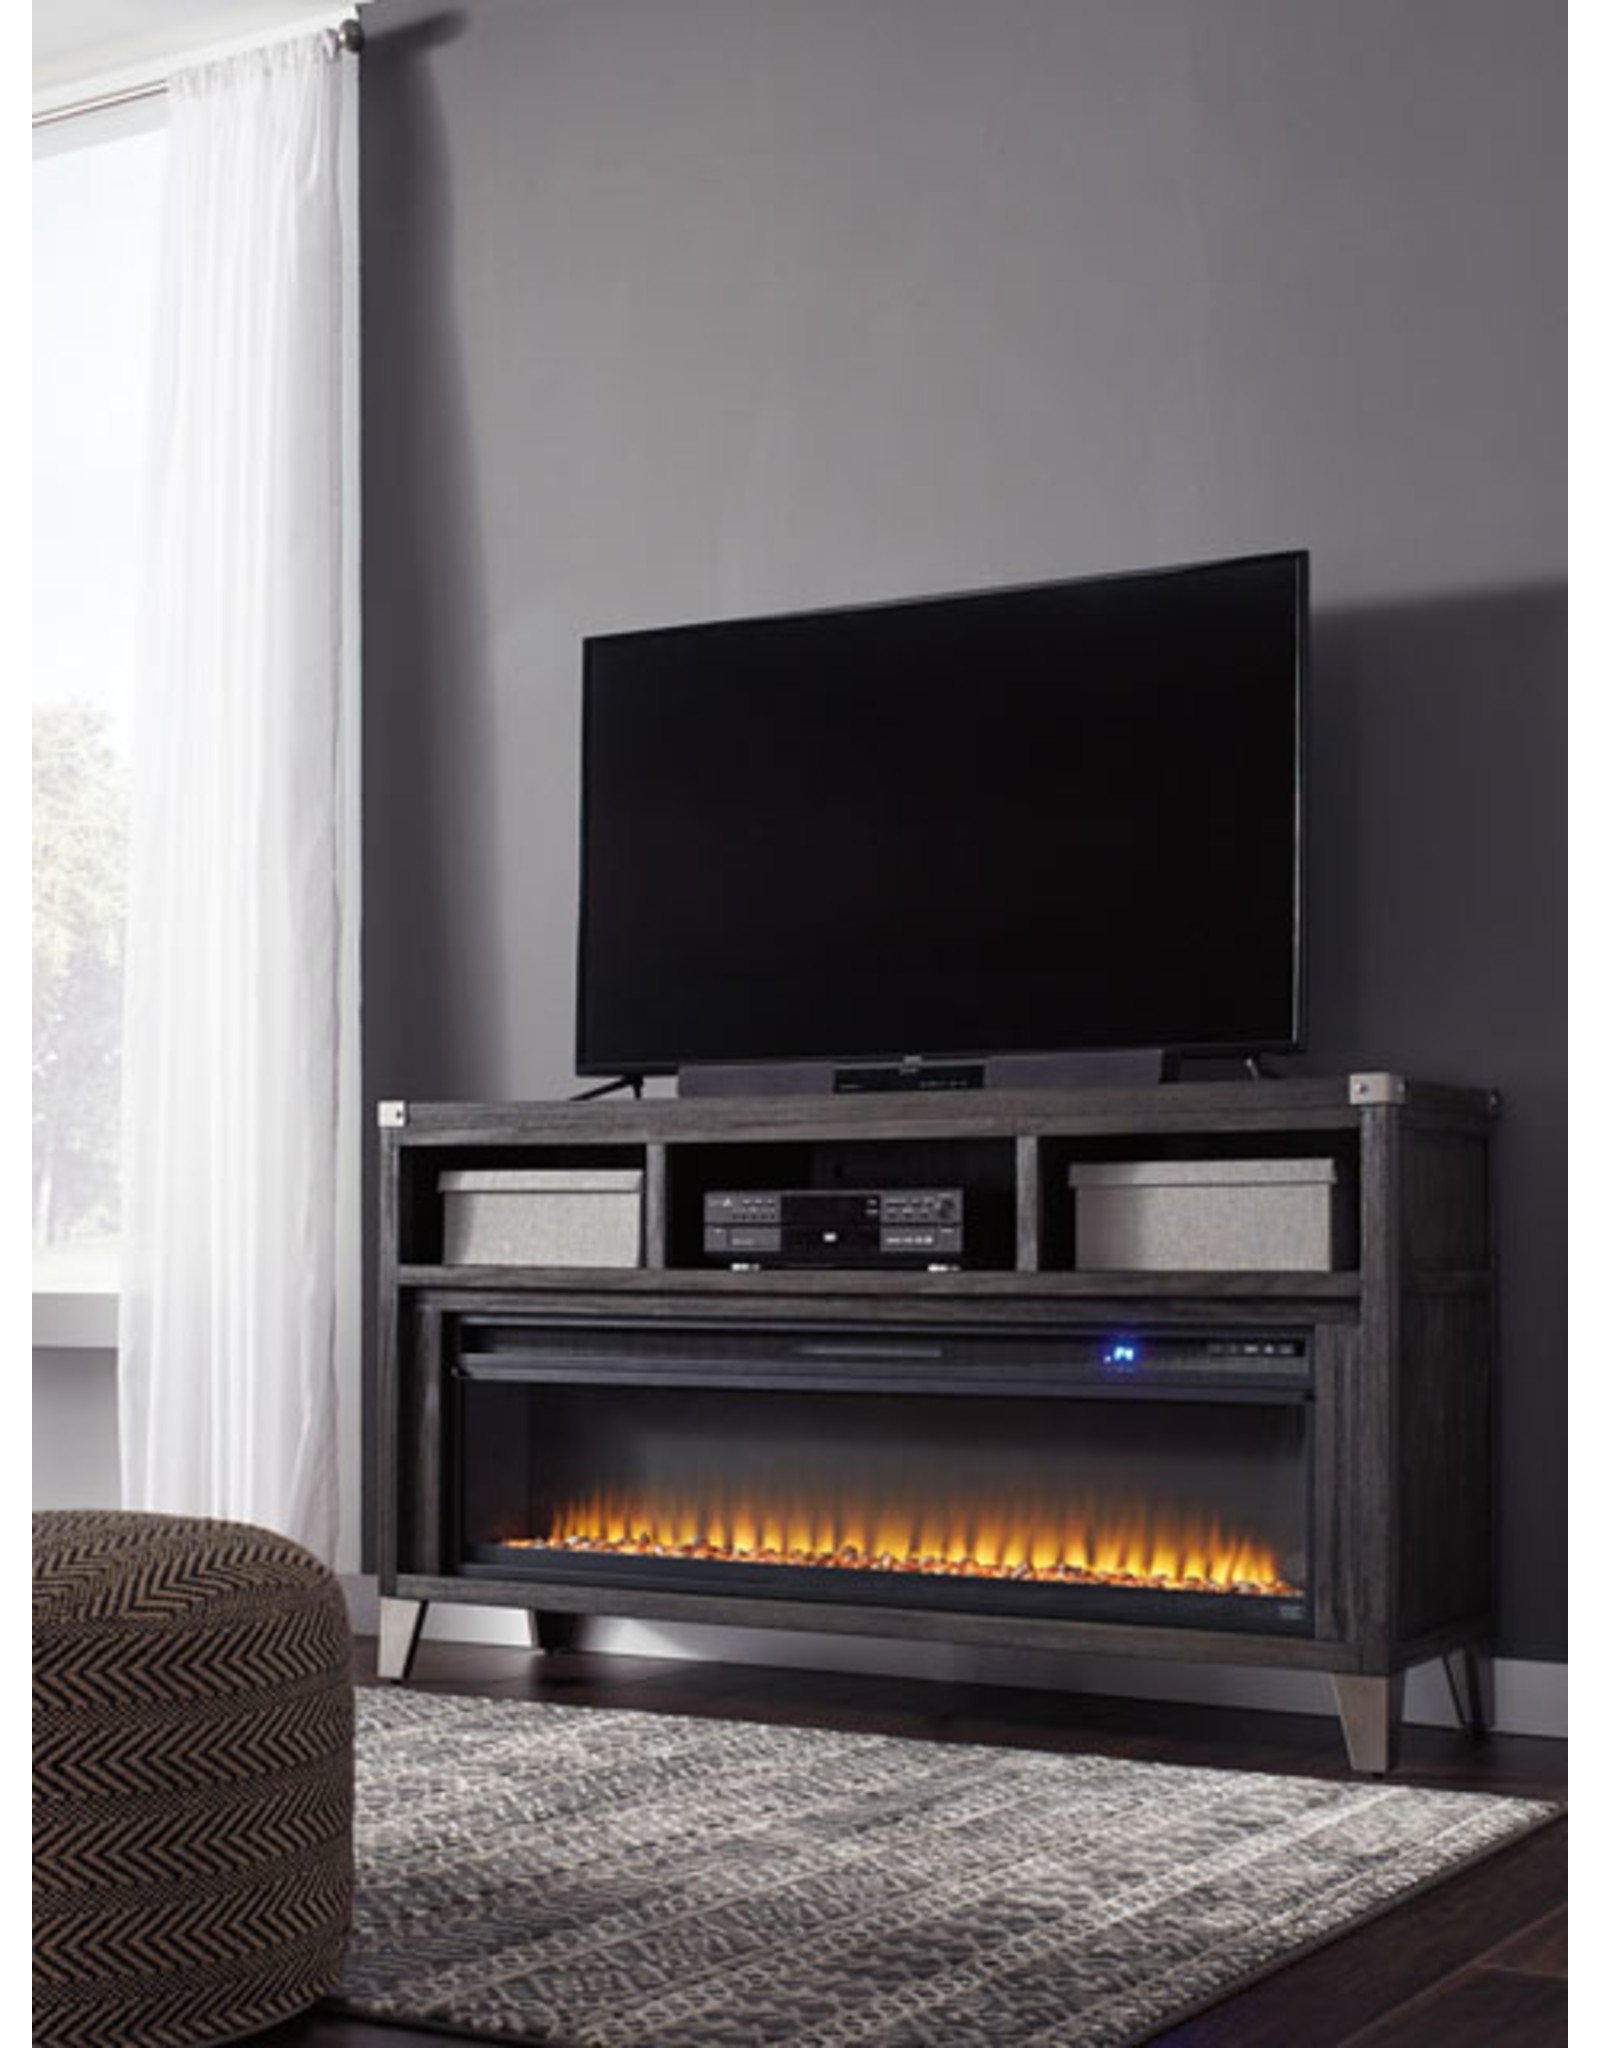 Tadoe W901-68 LG TV Stand W/ Fireplace Insert